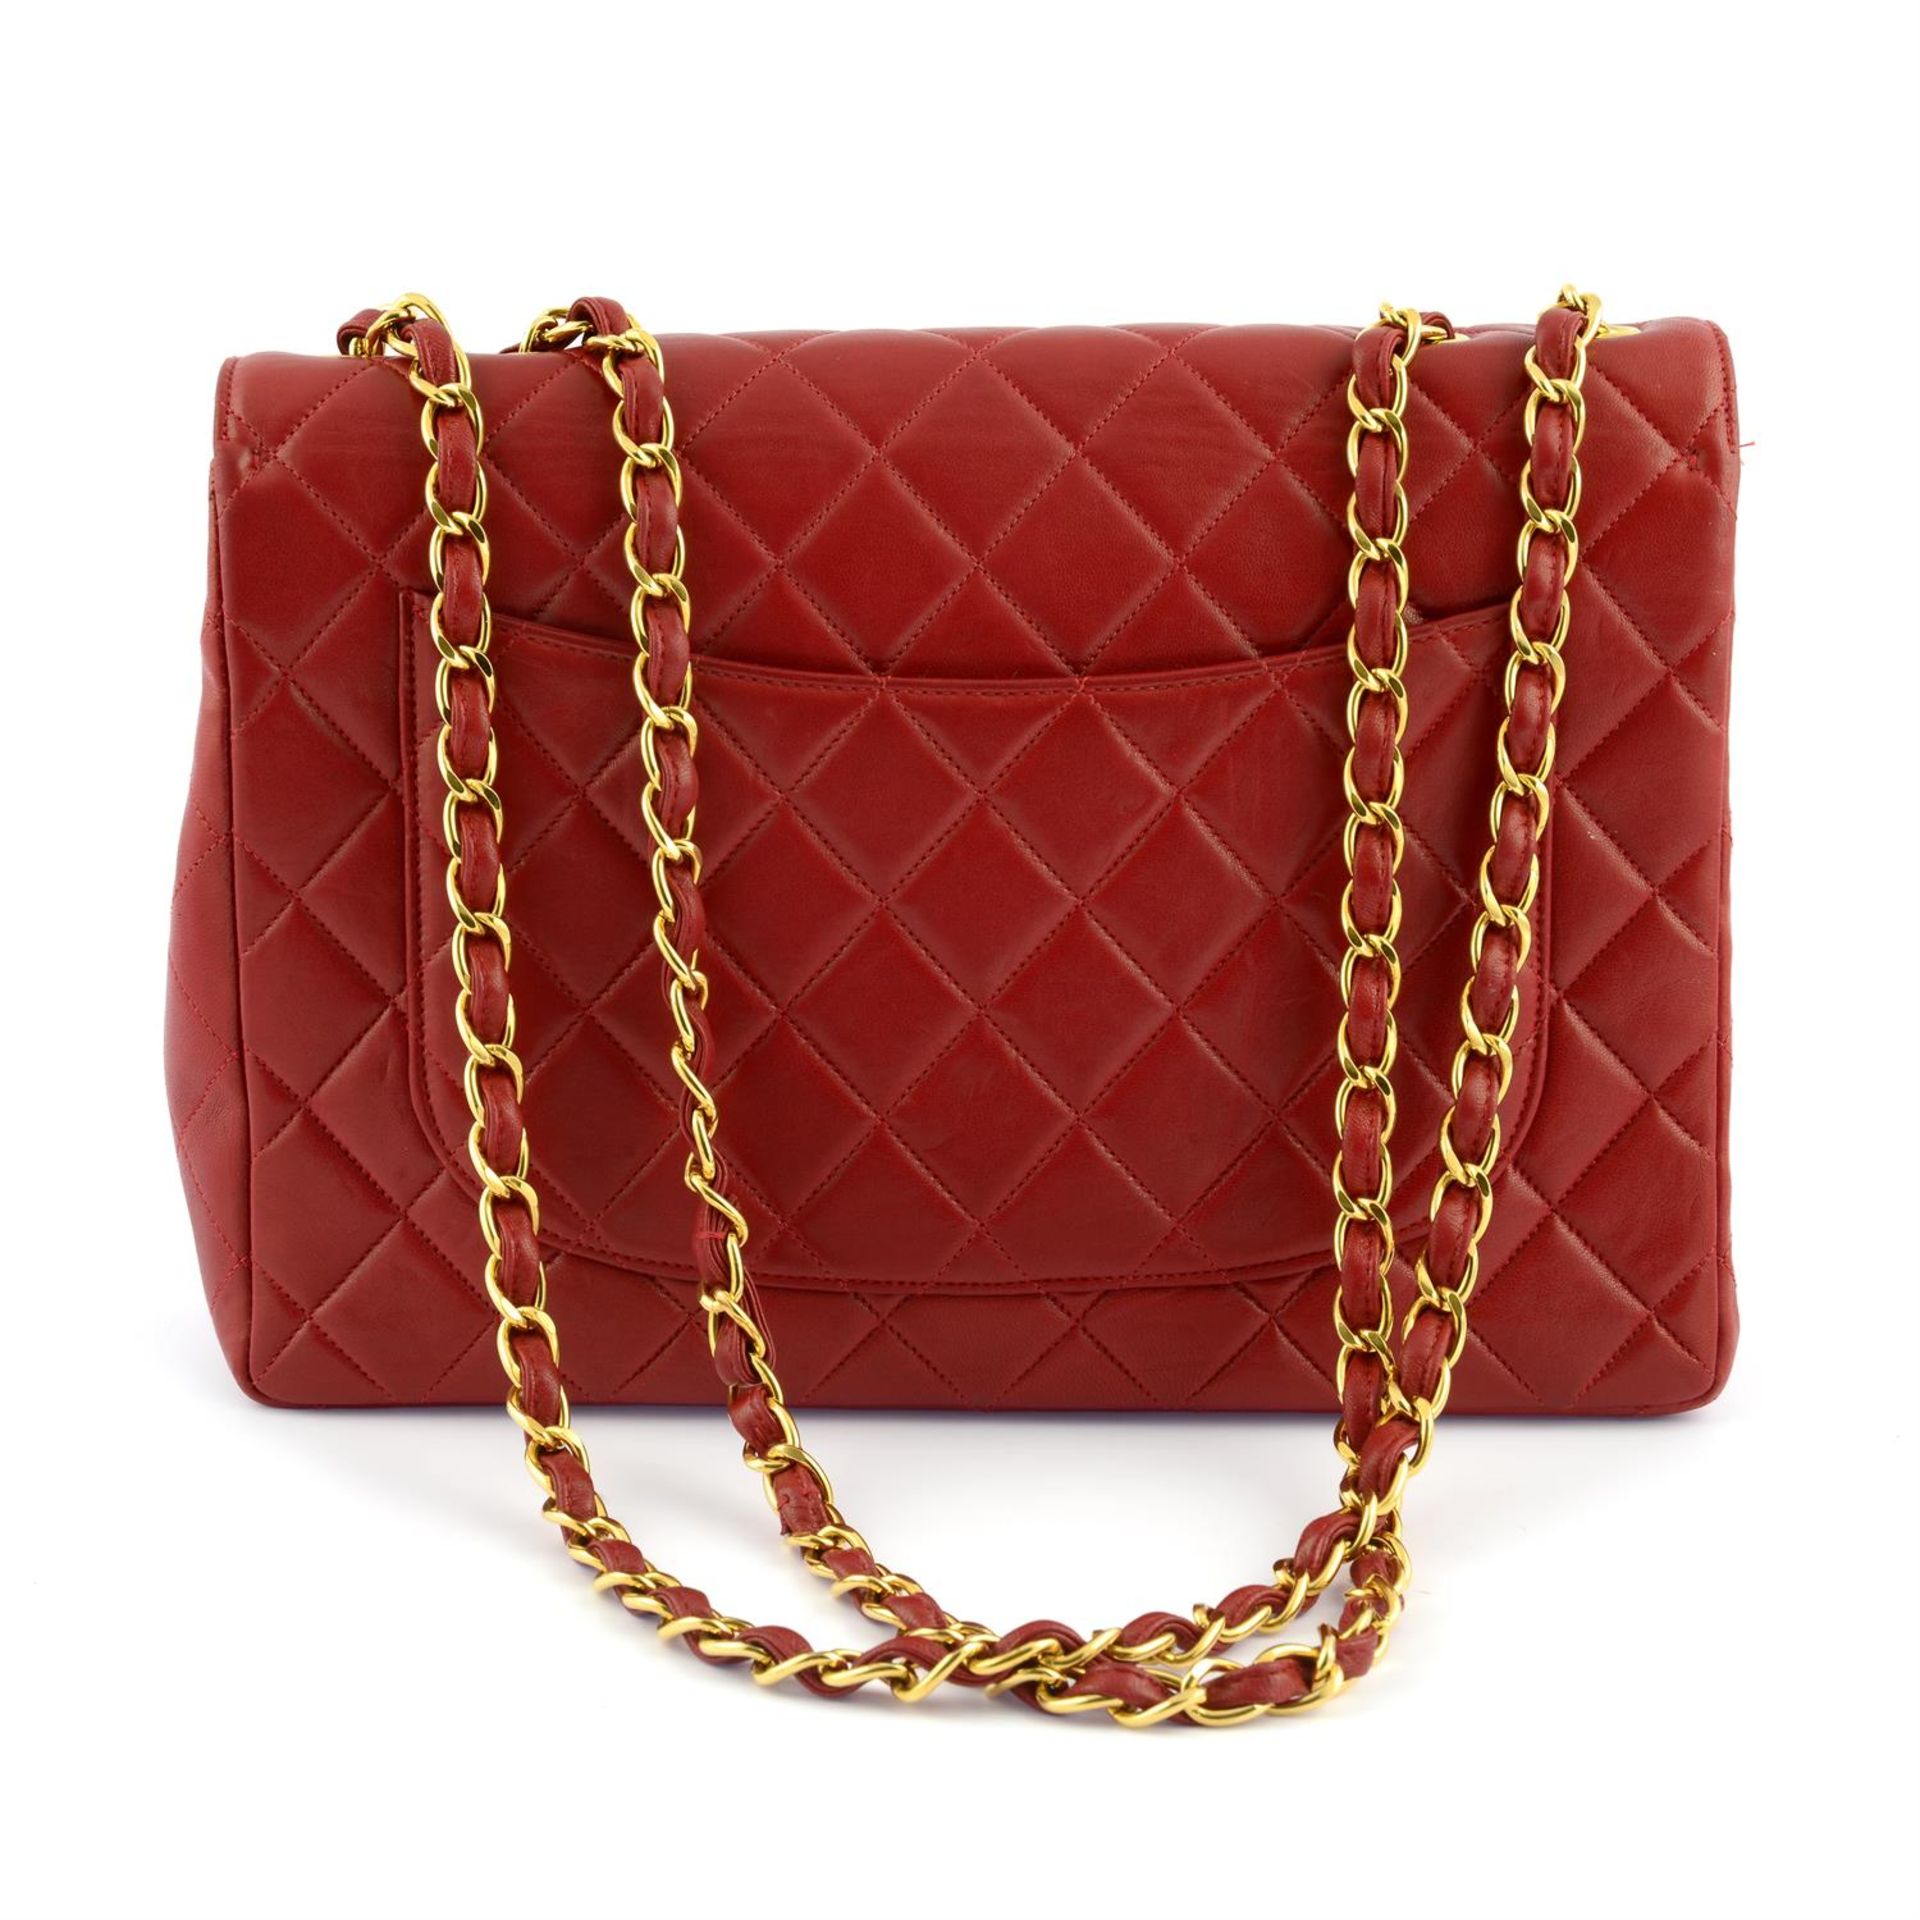 CHANEL - a red lambskin leather Jumbo flap handbag. - Image 2 of 6